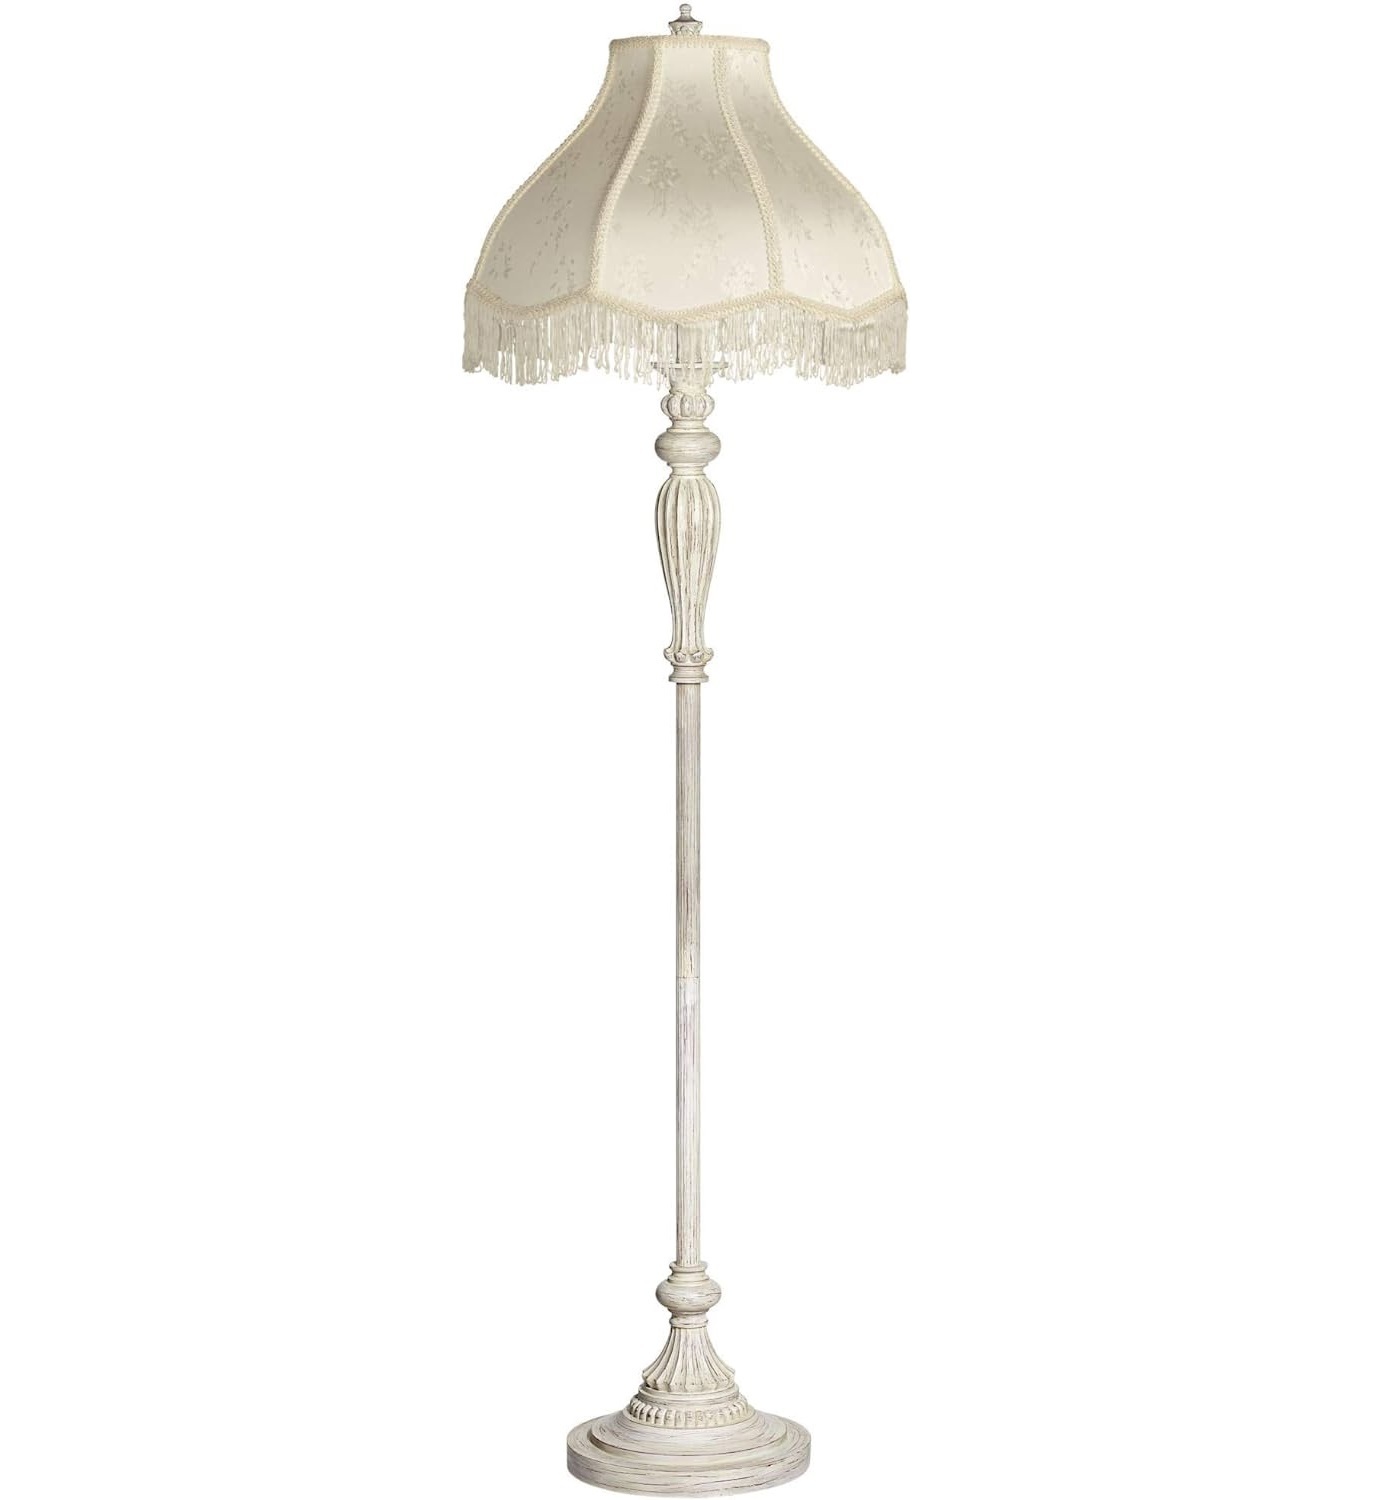 Vintage victorian standing lamp